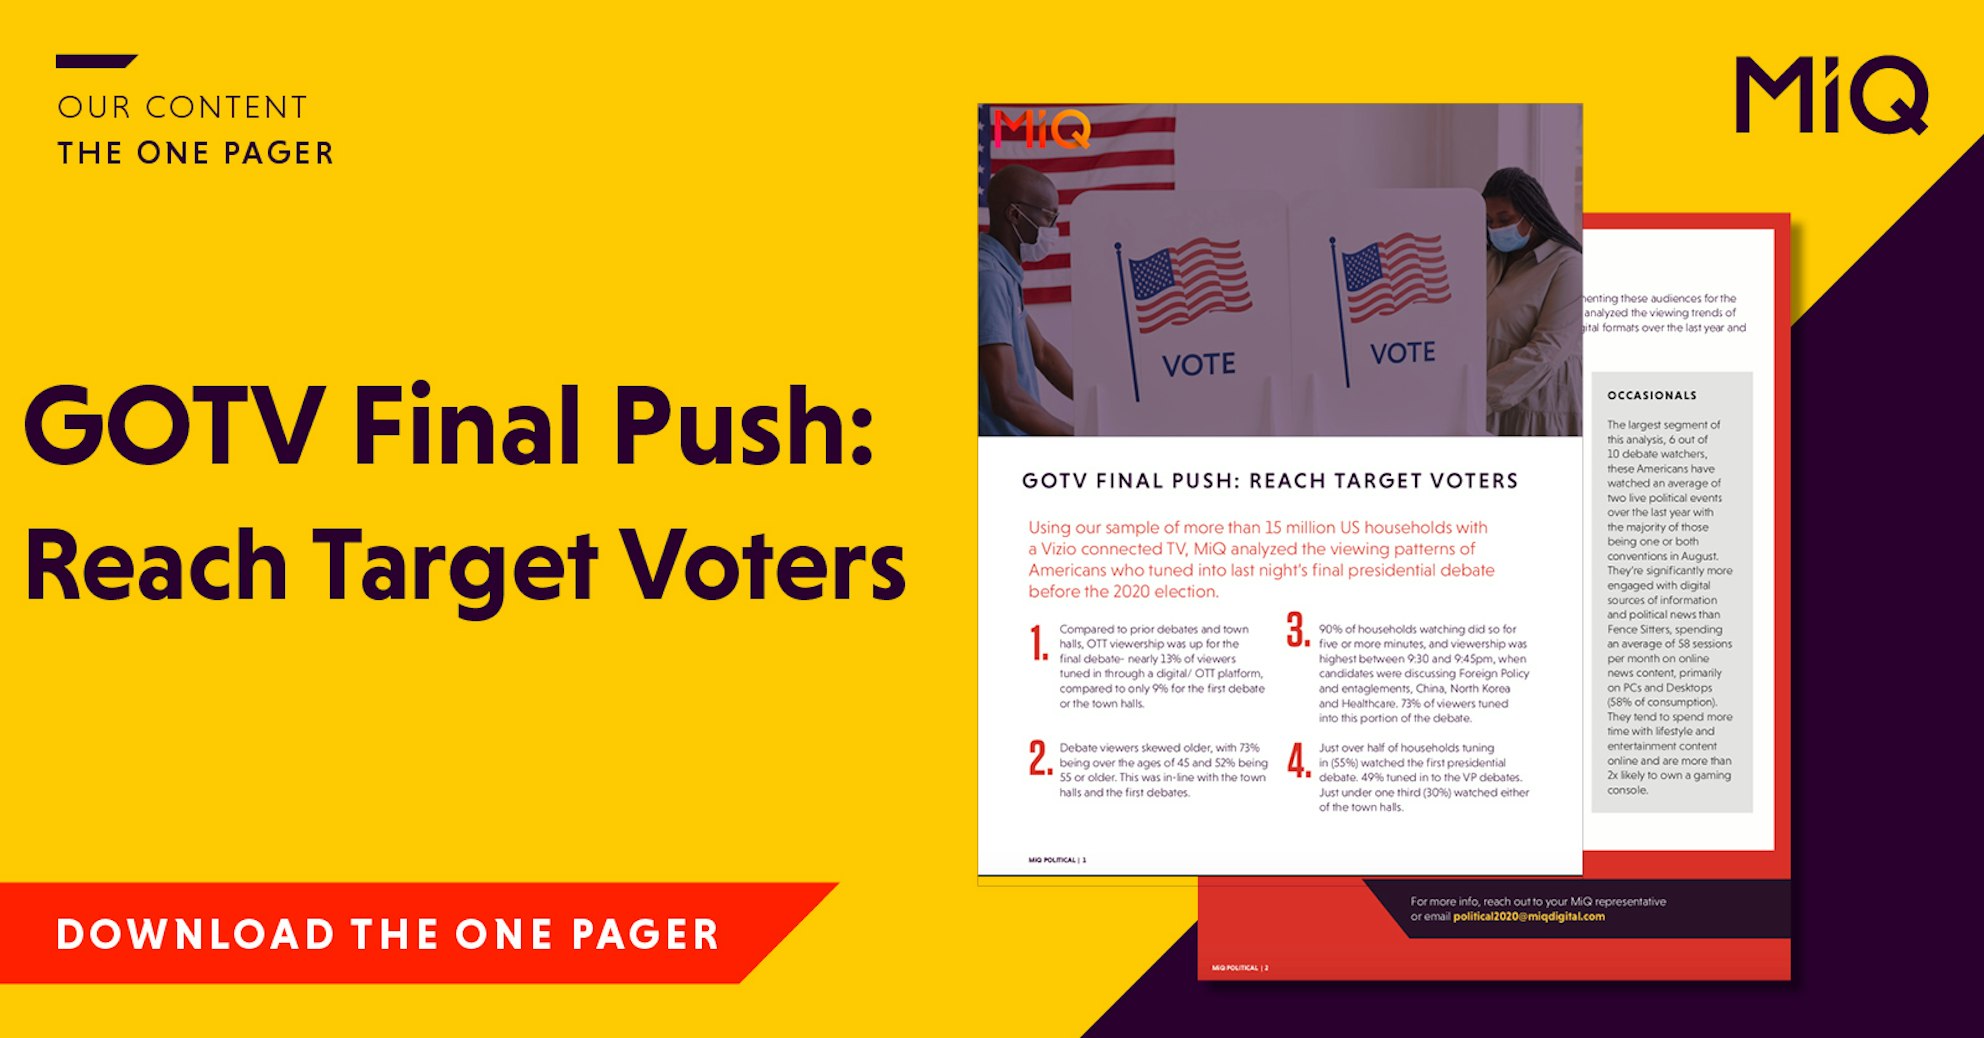 Gotv final push: reach target voters